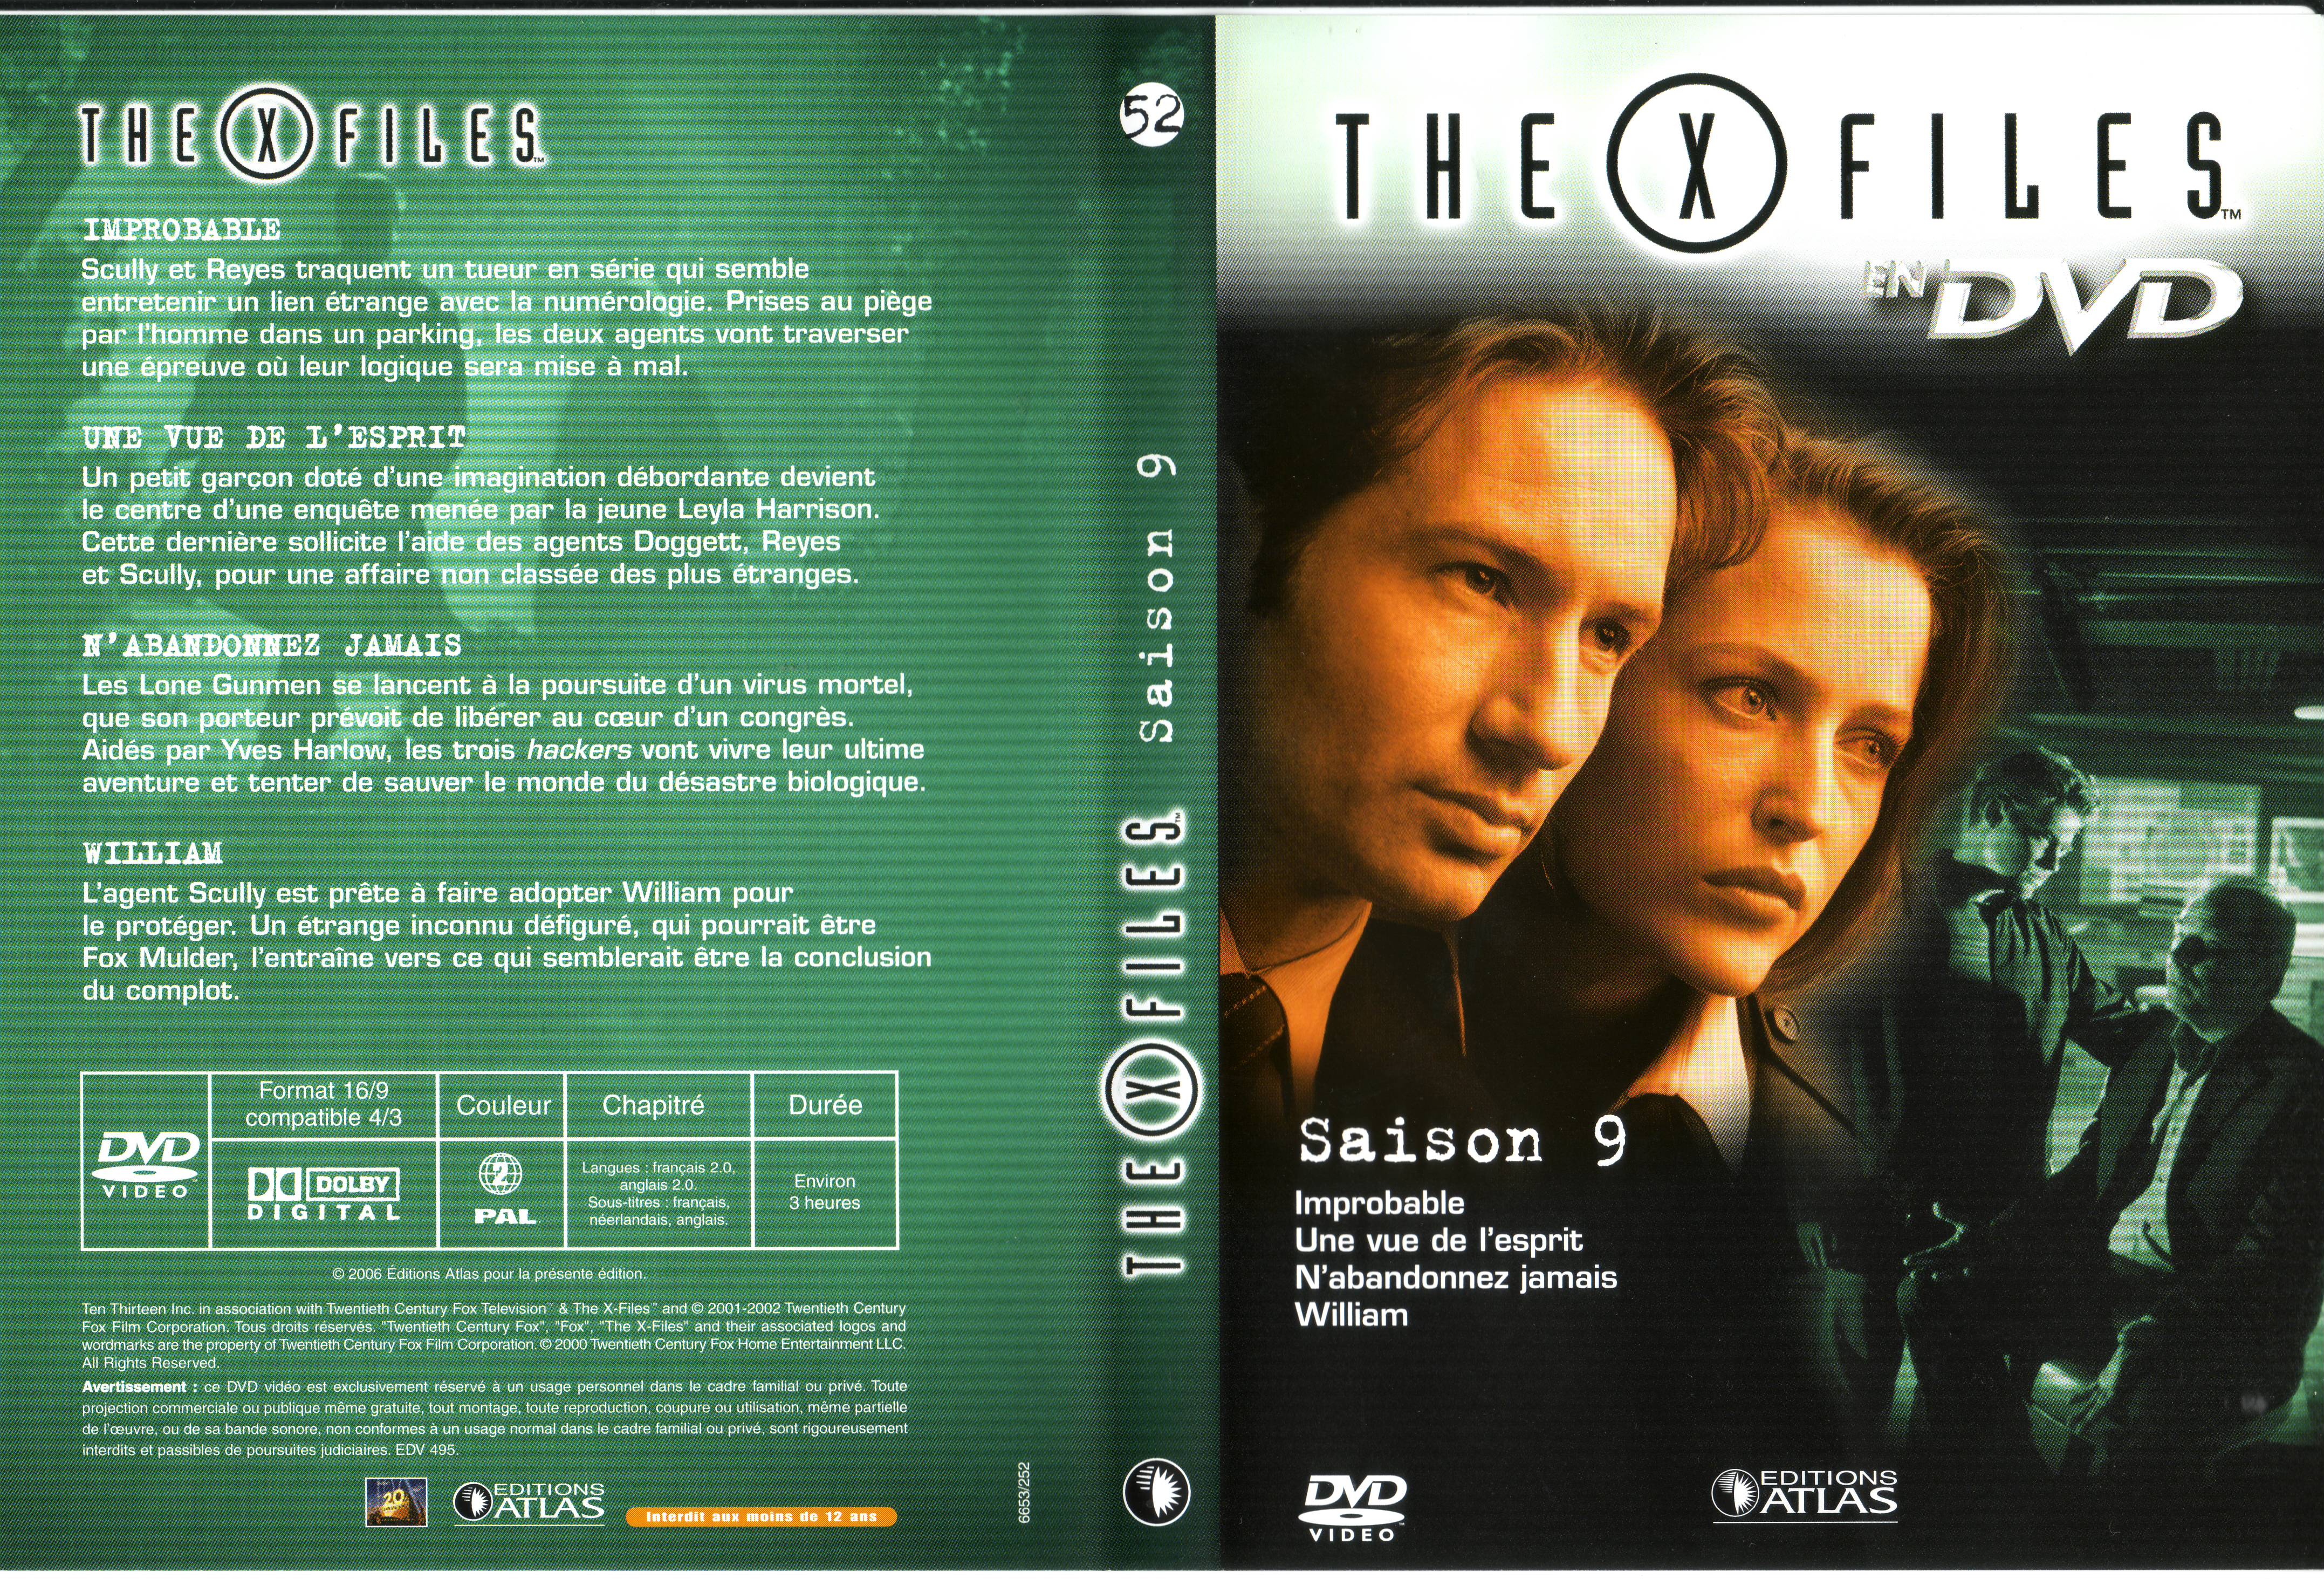 Jaquette DVD X Files saison 9 DVD 52